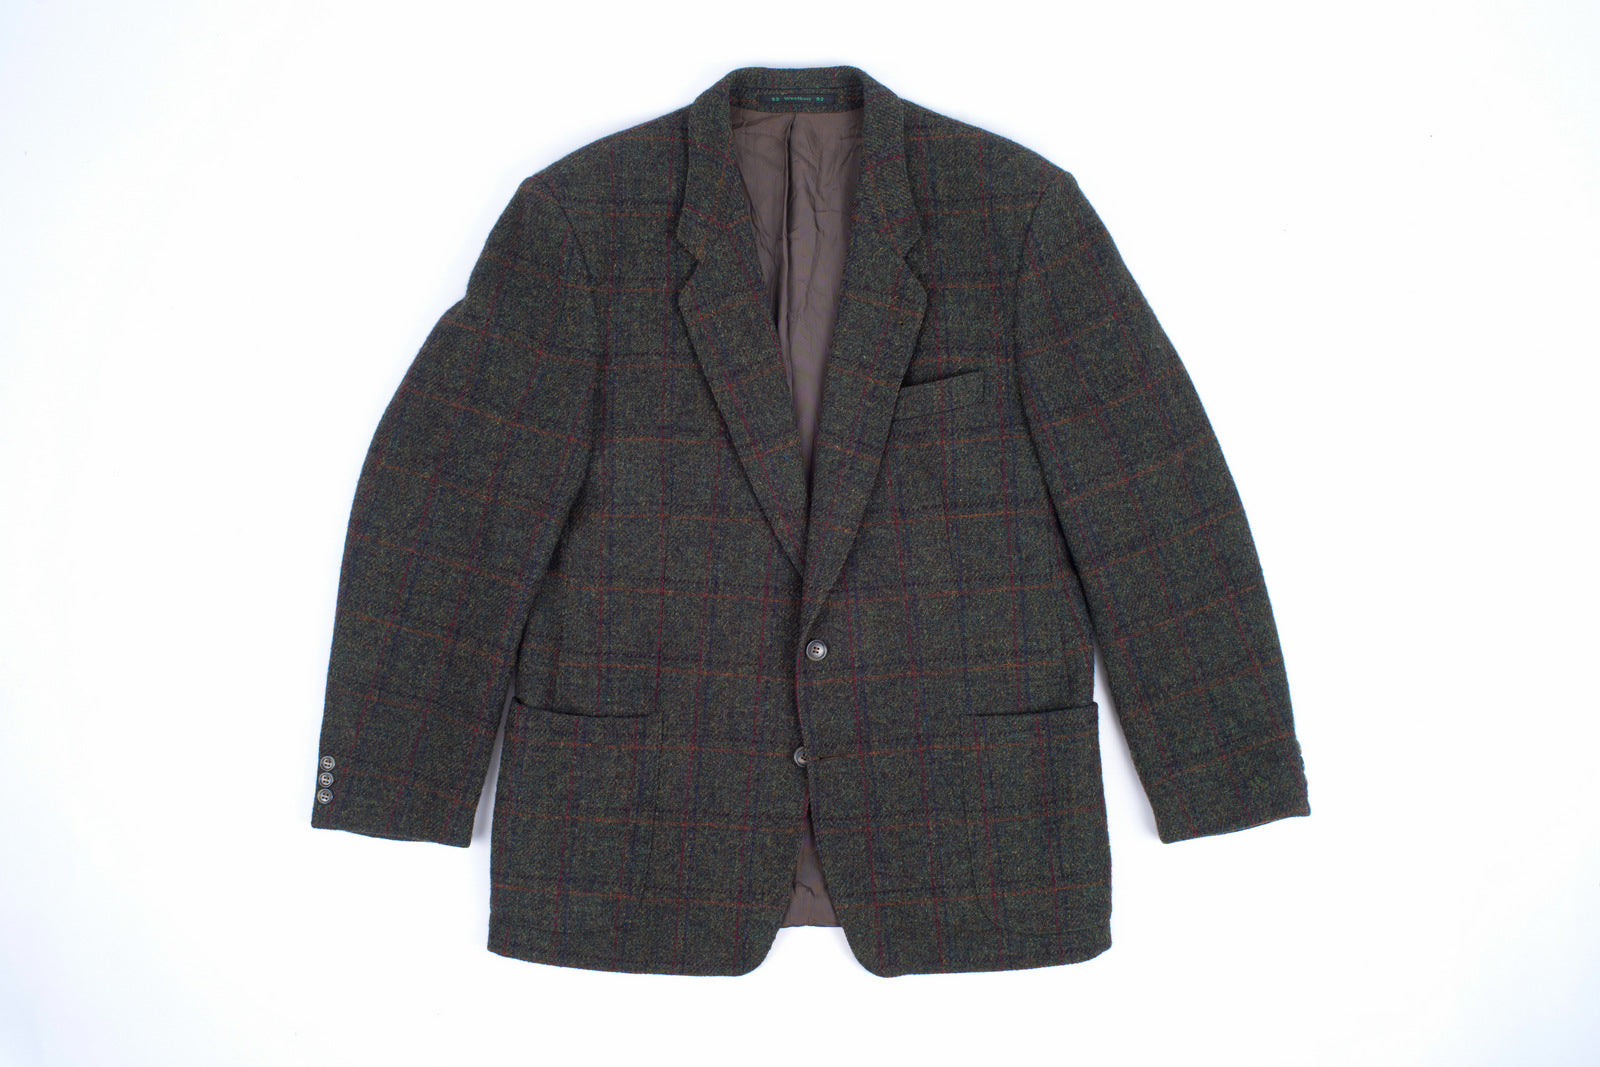 Harris Tweed Plaid Forest Green 2 Button Blazer Sport Coat, US 42R, EU 52